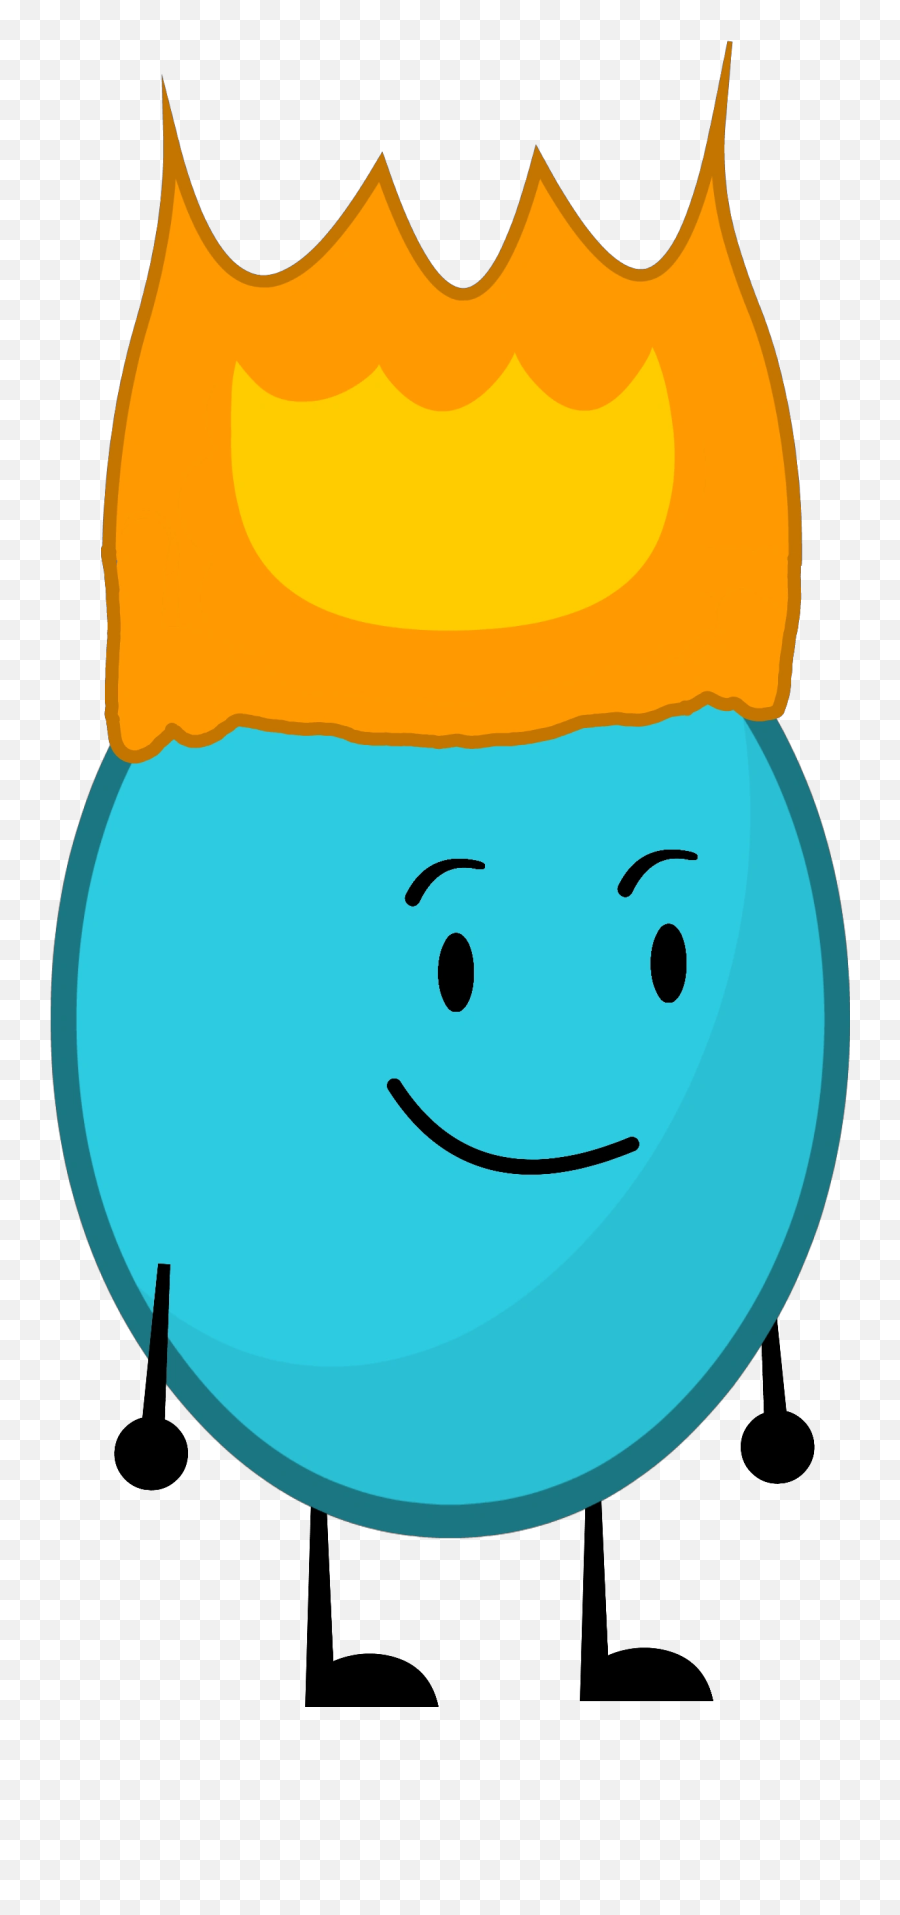 Numpty - Oc Bfdi 1 Png Battle For Dream Island Wiki Fandom Powered By Wikia Emoji,Mouth Watering Emoticon